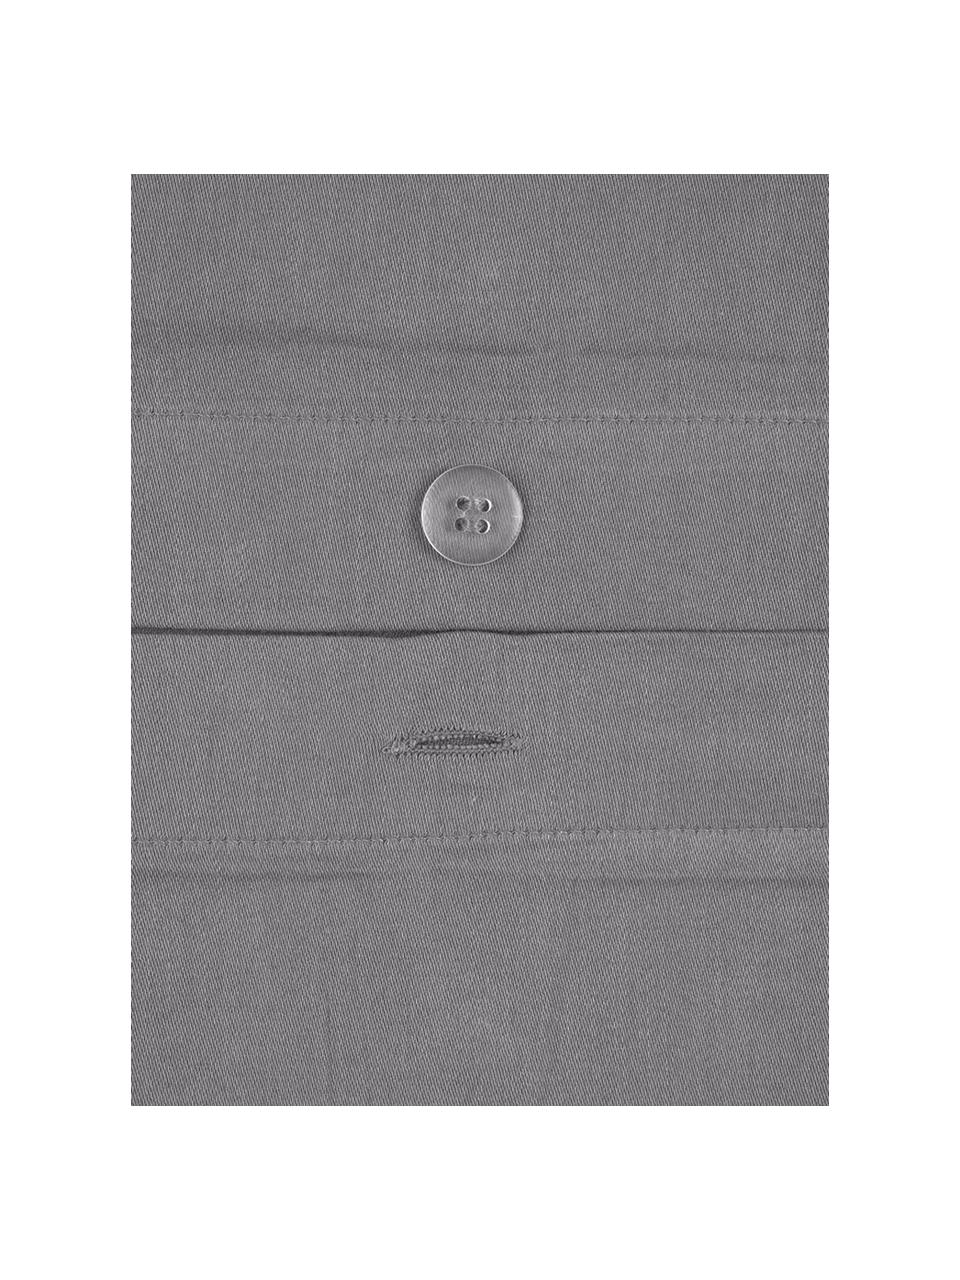 Funda de almohada de satén Comfort, Gris oscuro, An 45 x L 85 cm